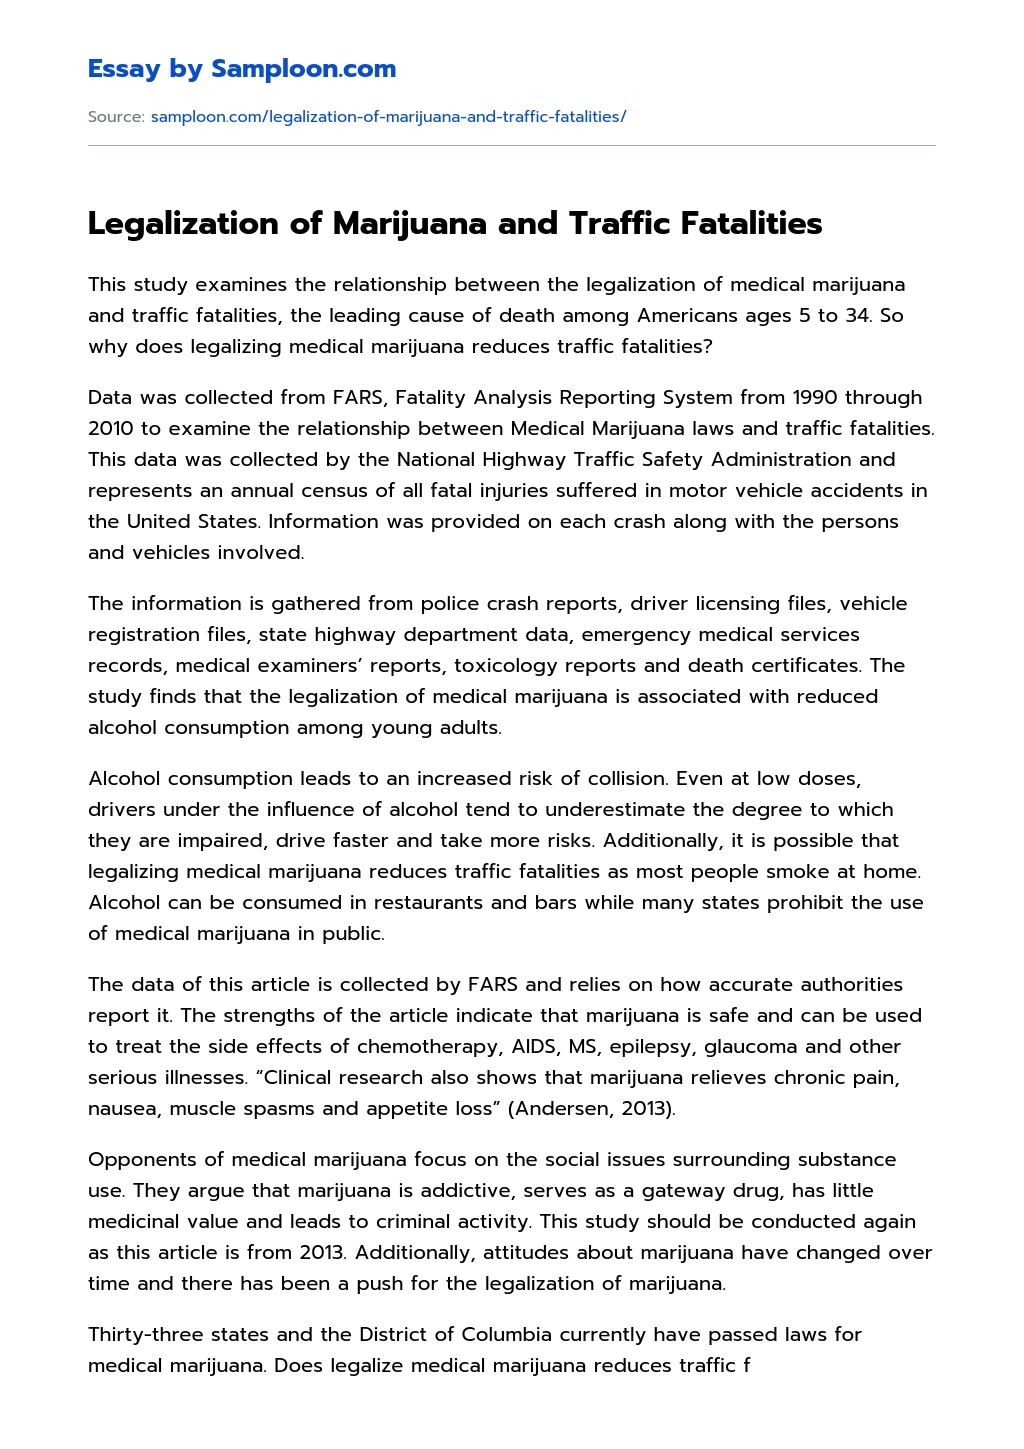 Legalization of Marijuana and Traffic Fatalities essay